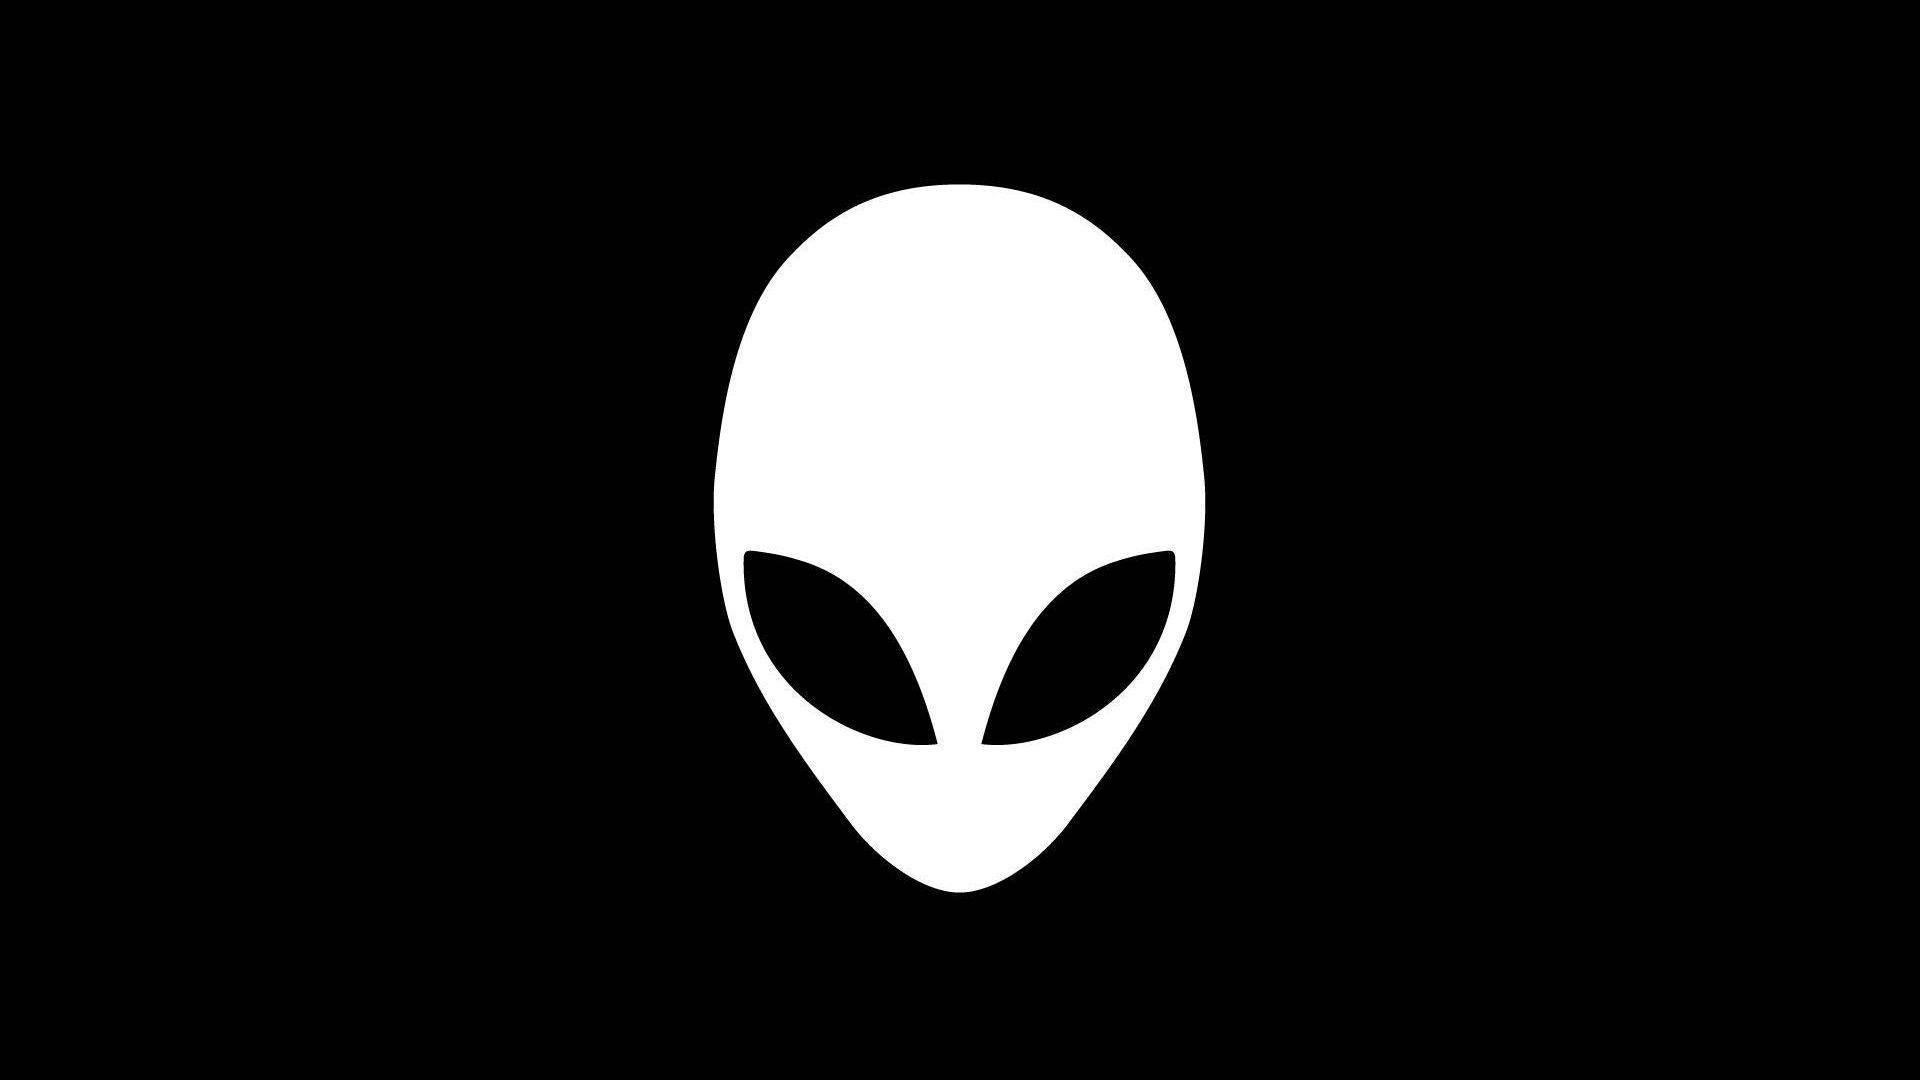 Minimalist Plain White Alienware Symbol Background